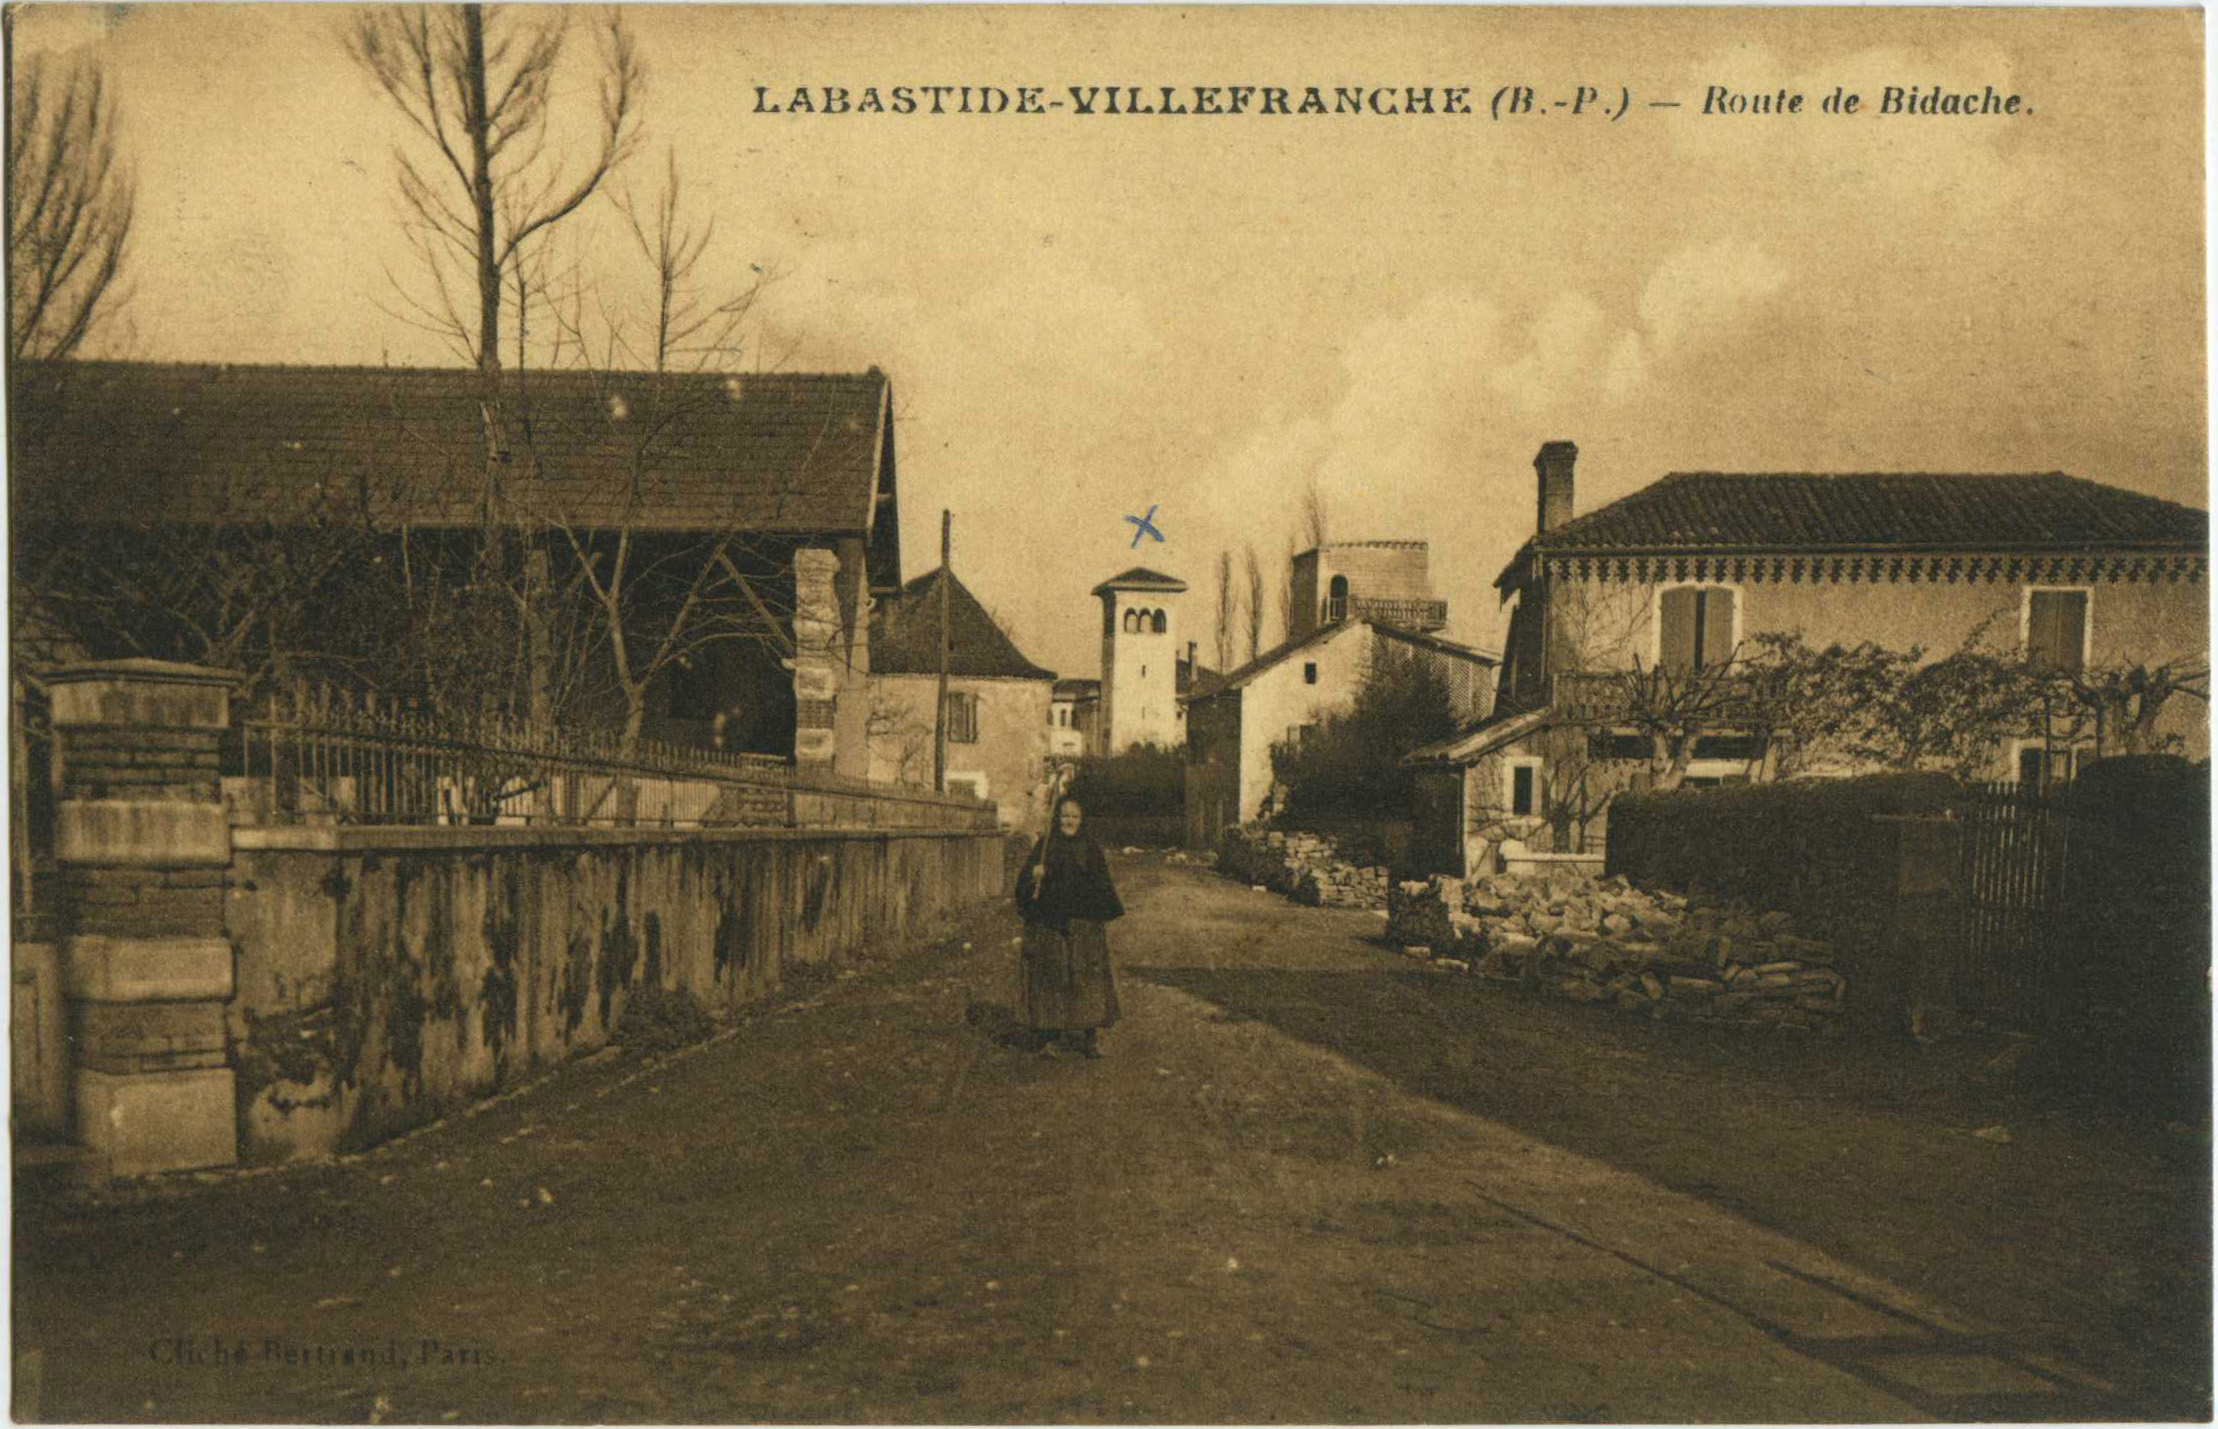 Labastide-Villefranche - Route de Bidache.